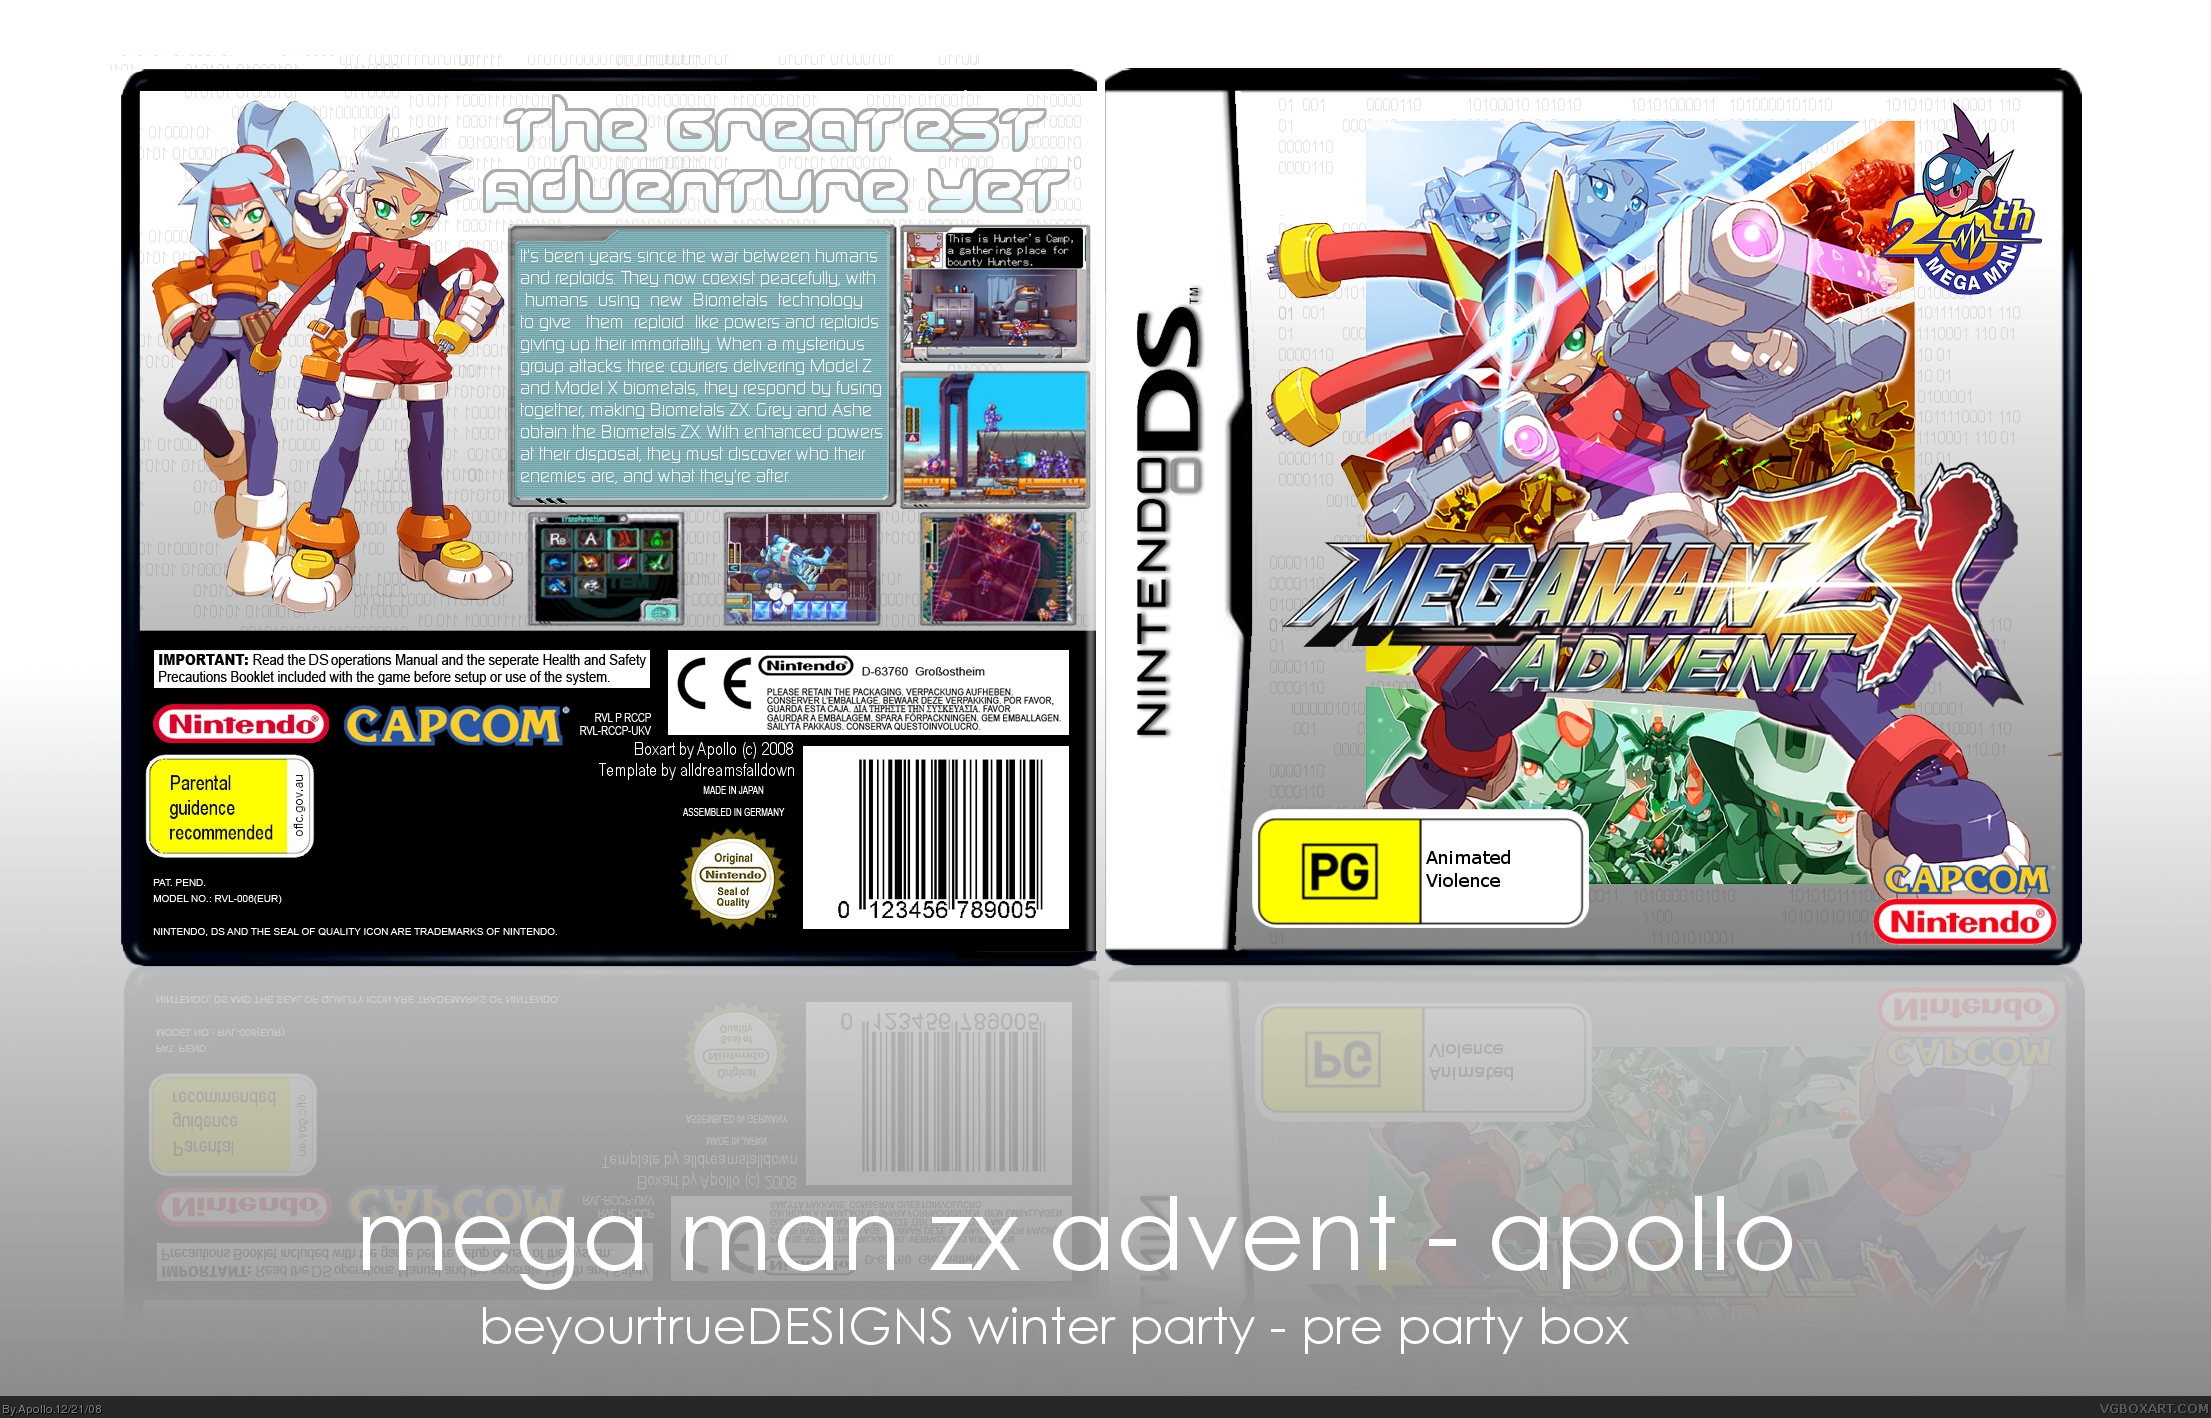 Megaman ZX Advent box cover